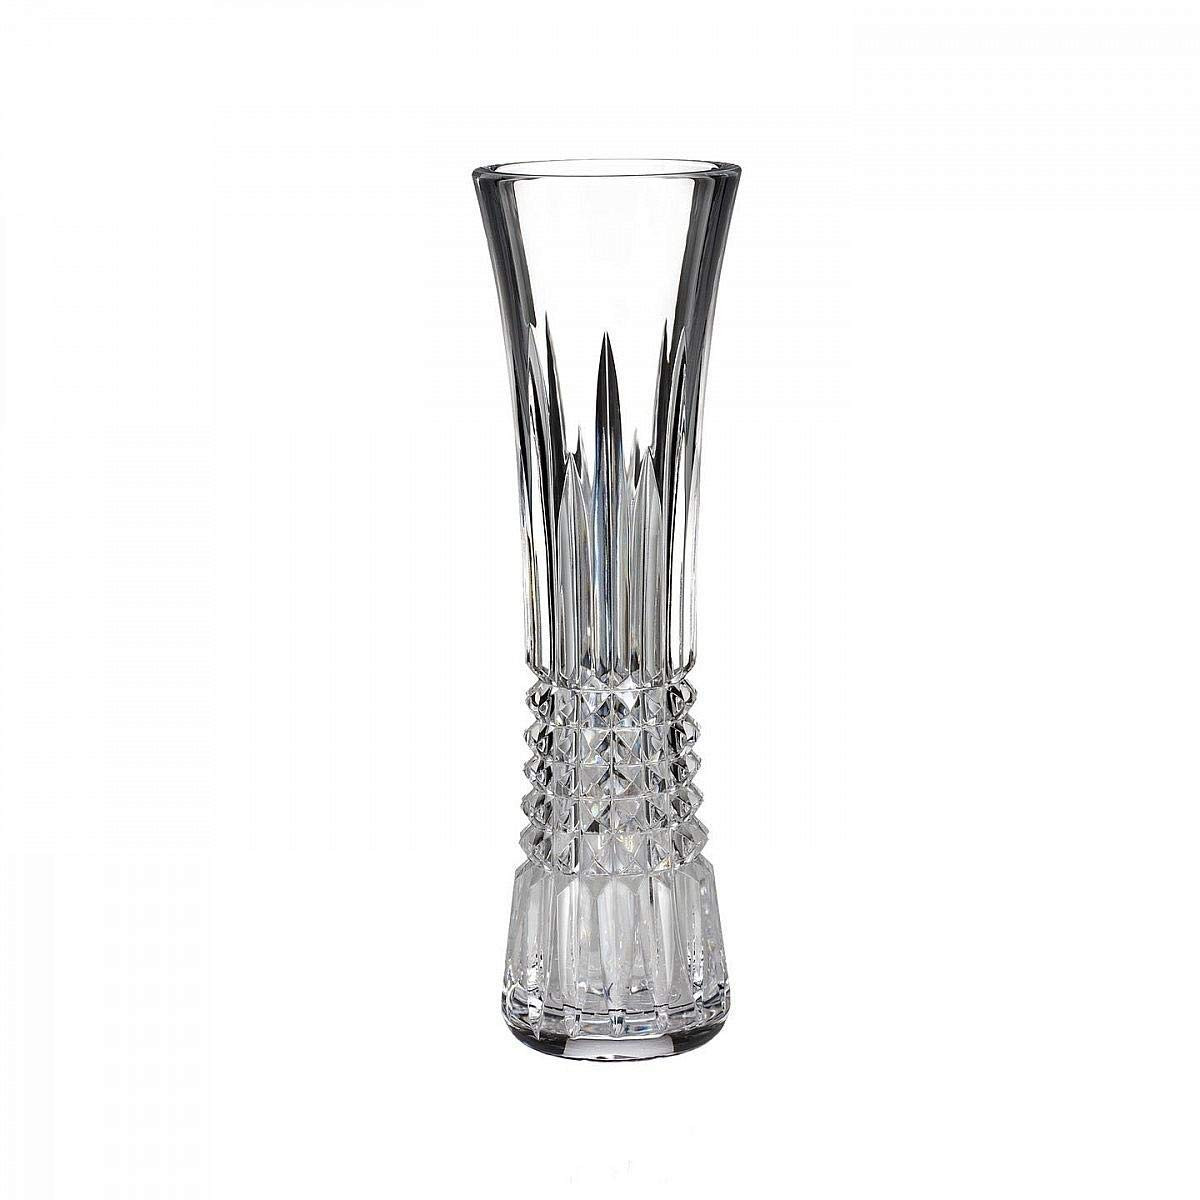 waterford lismore vase 8 of amazon com waterford crystal lismore diamond bud vase home kitchen inside 61vi6udt1il sl1200